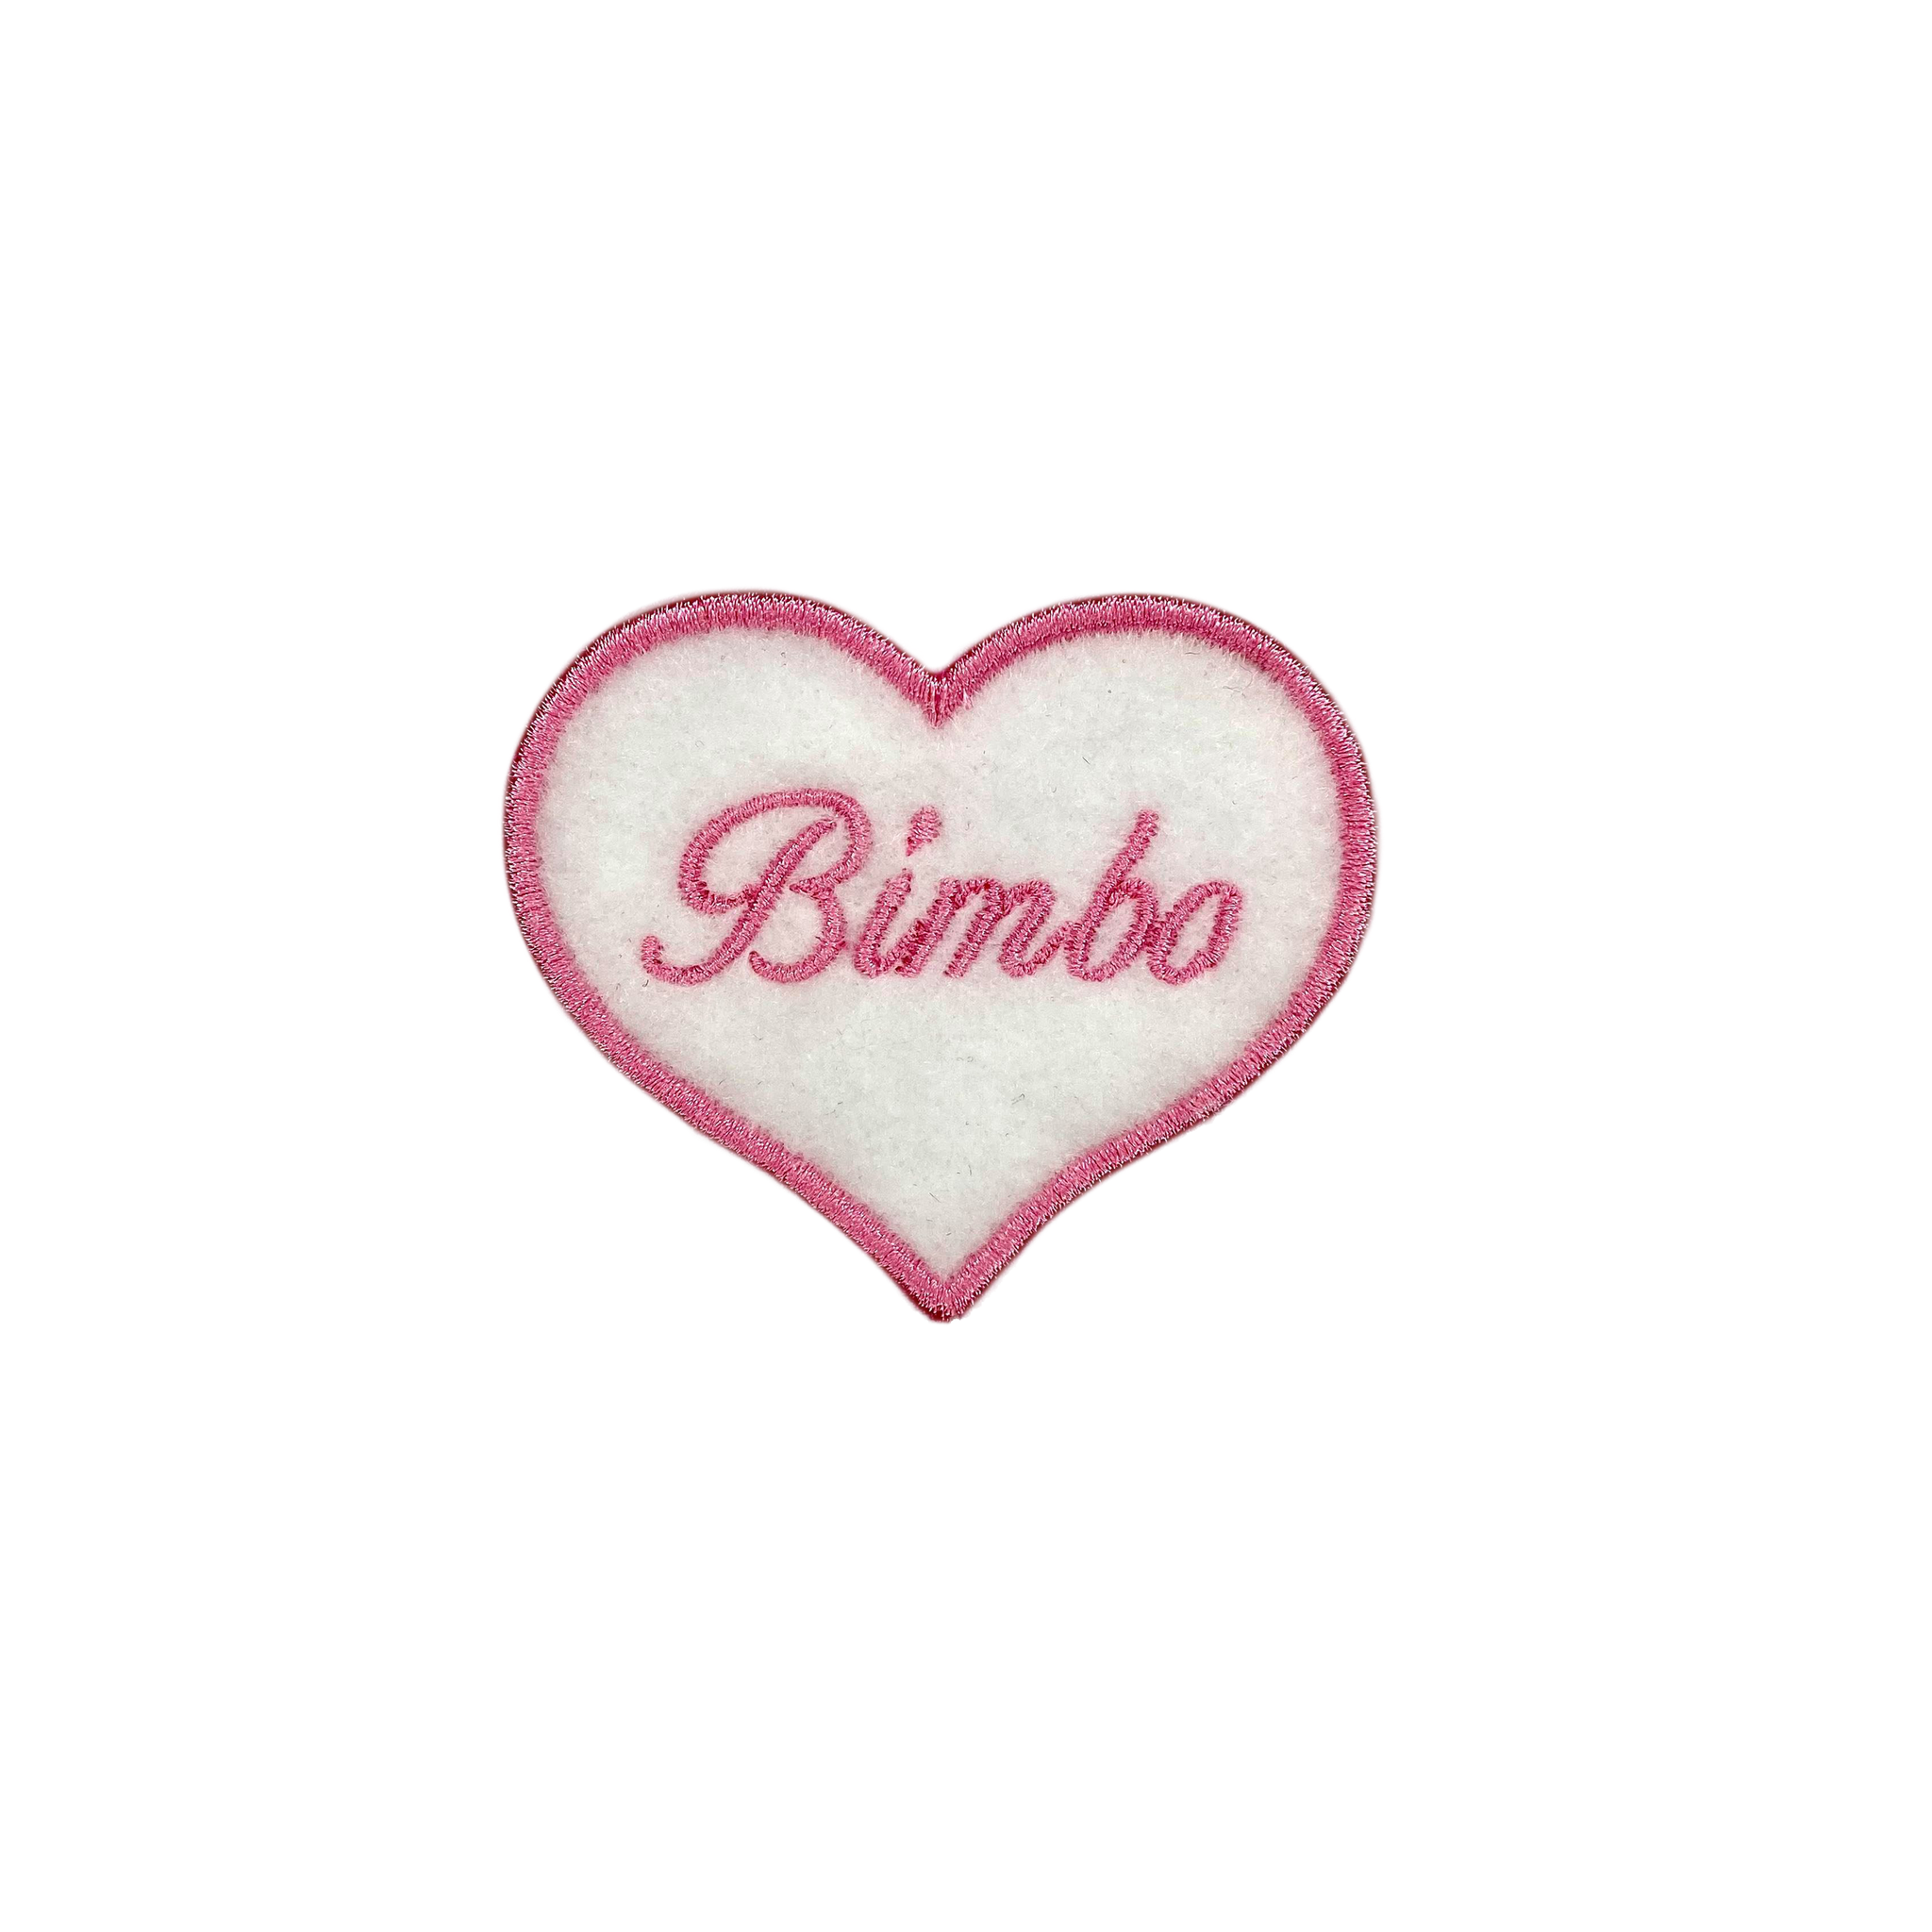 Bimbo Embroidered Iron-on Patch - IncredibleGood Inc